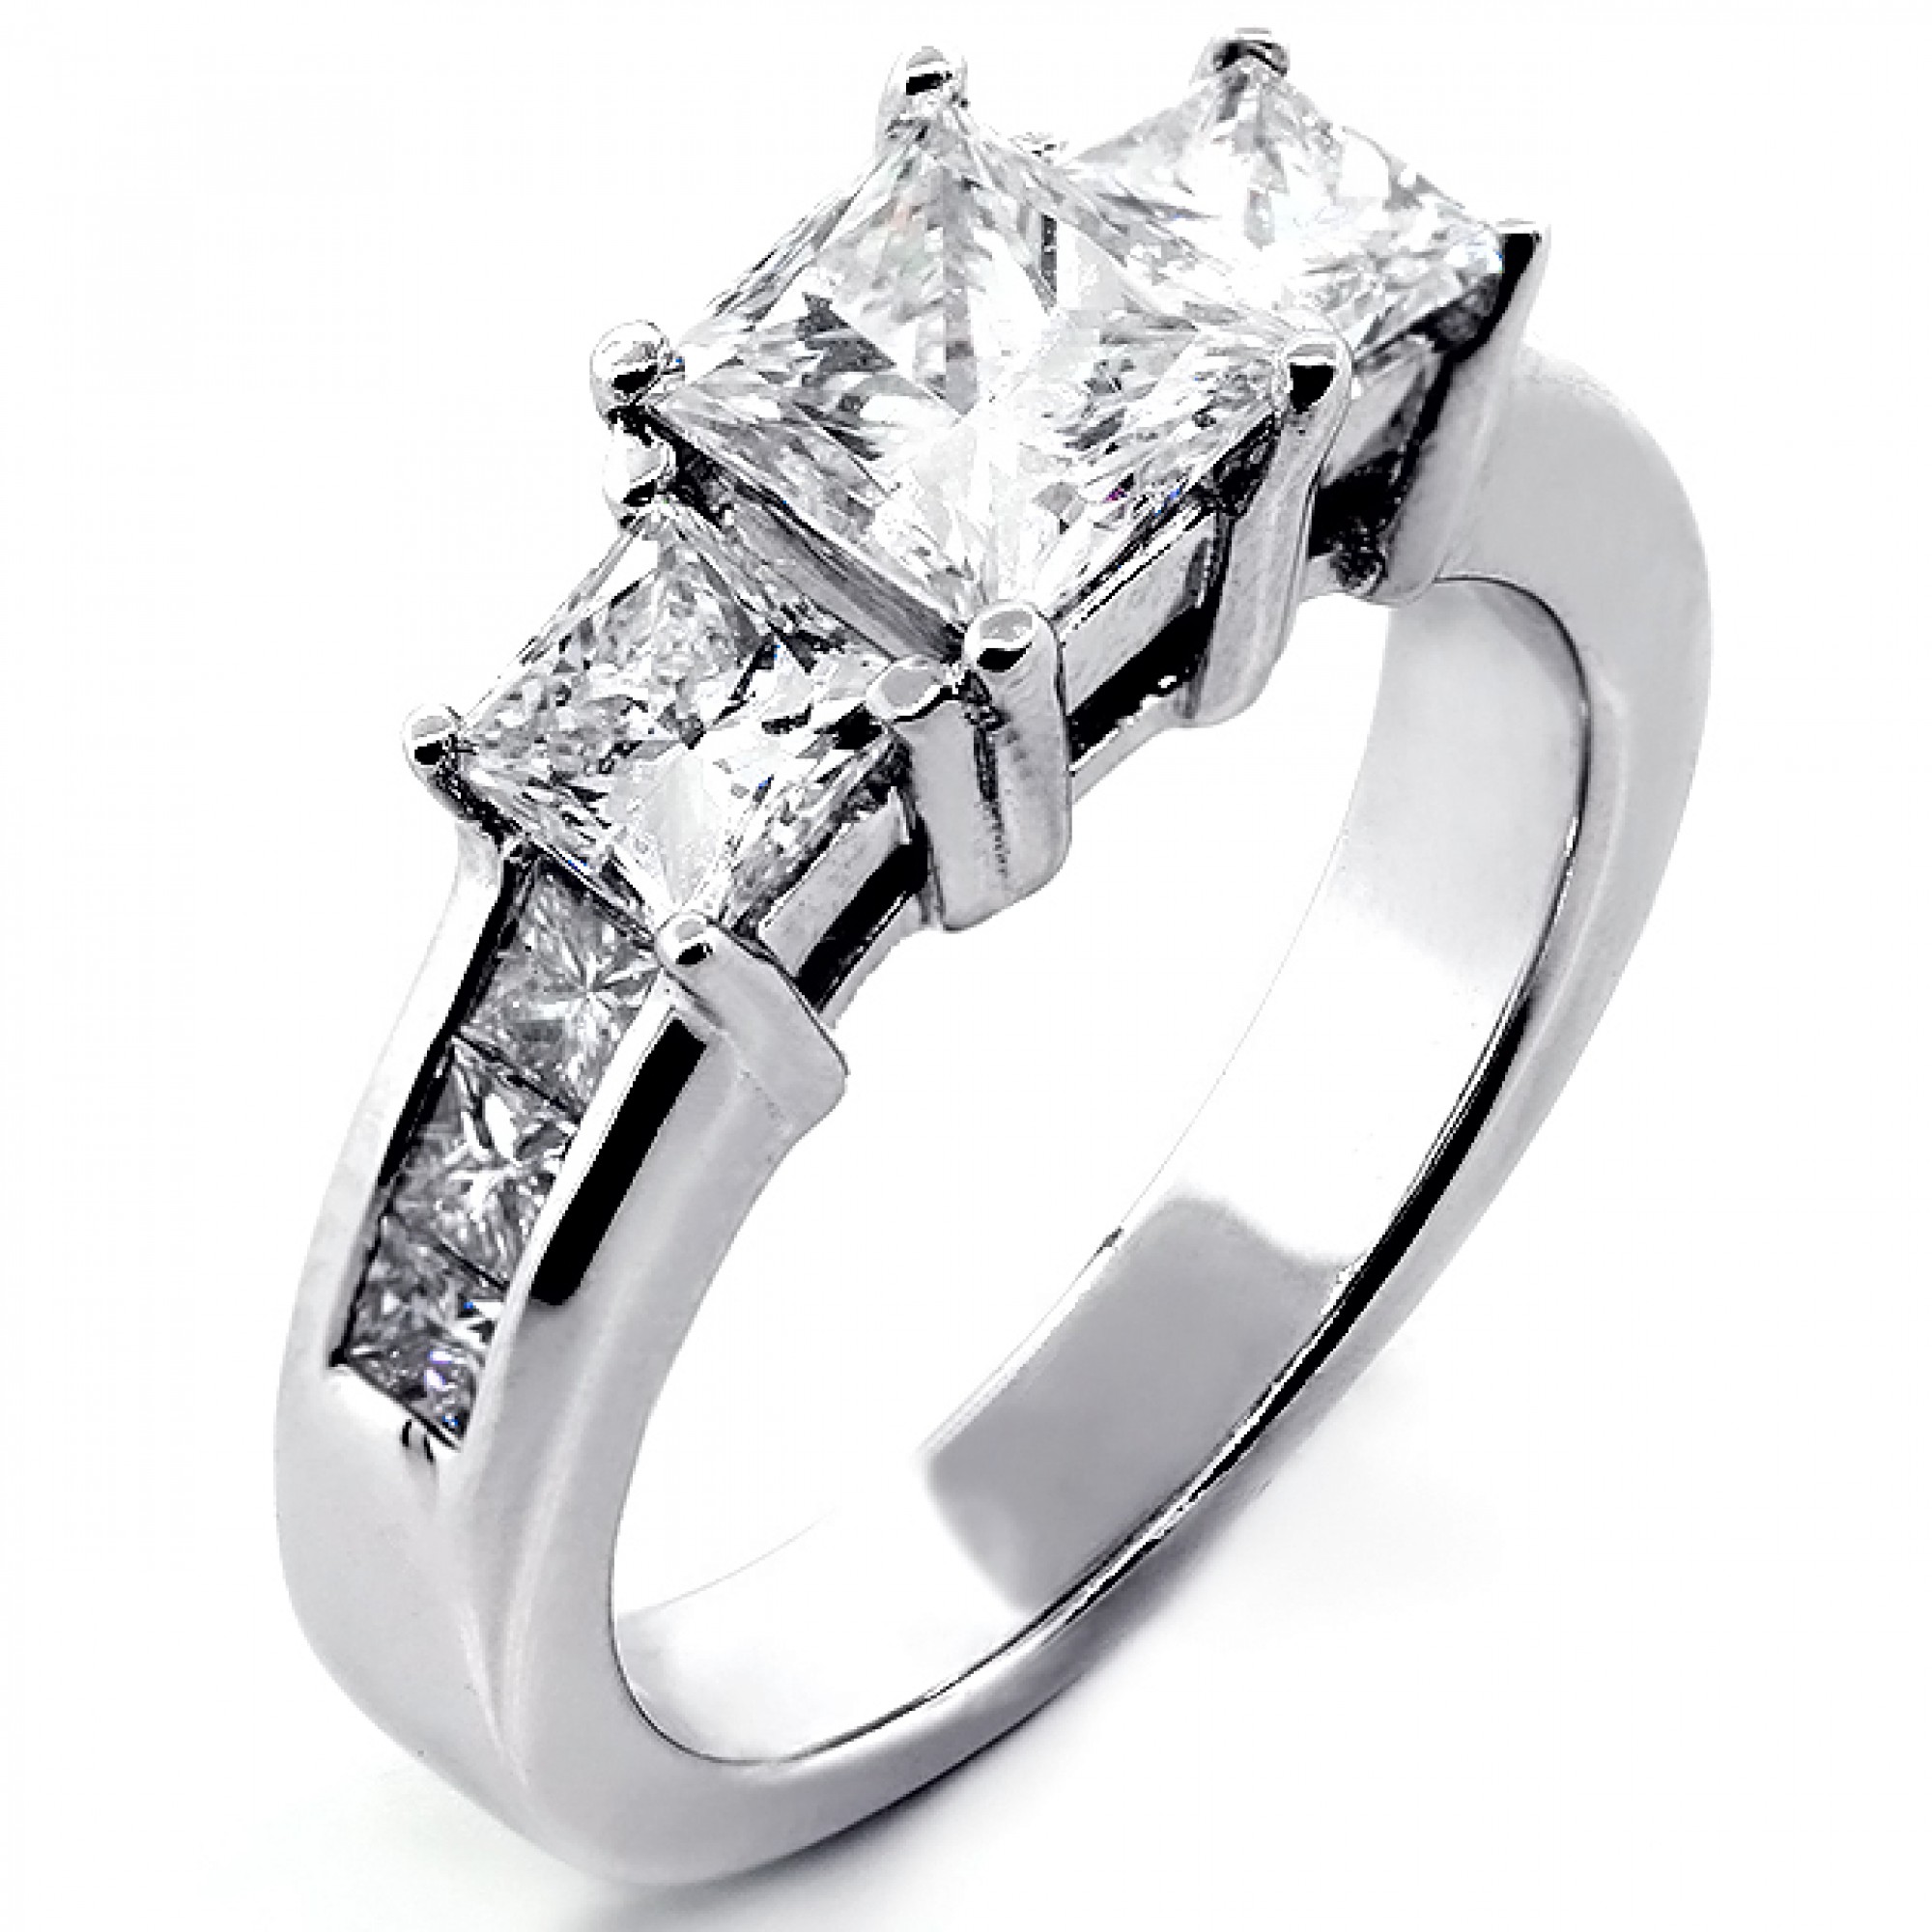 2.62 Cts Three Stone Princess Cut Diamond Engagement Ring set in 